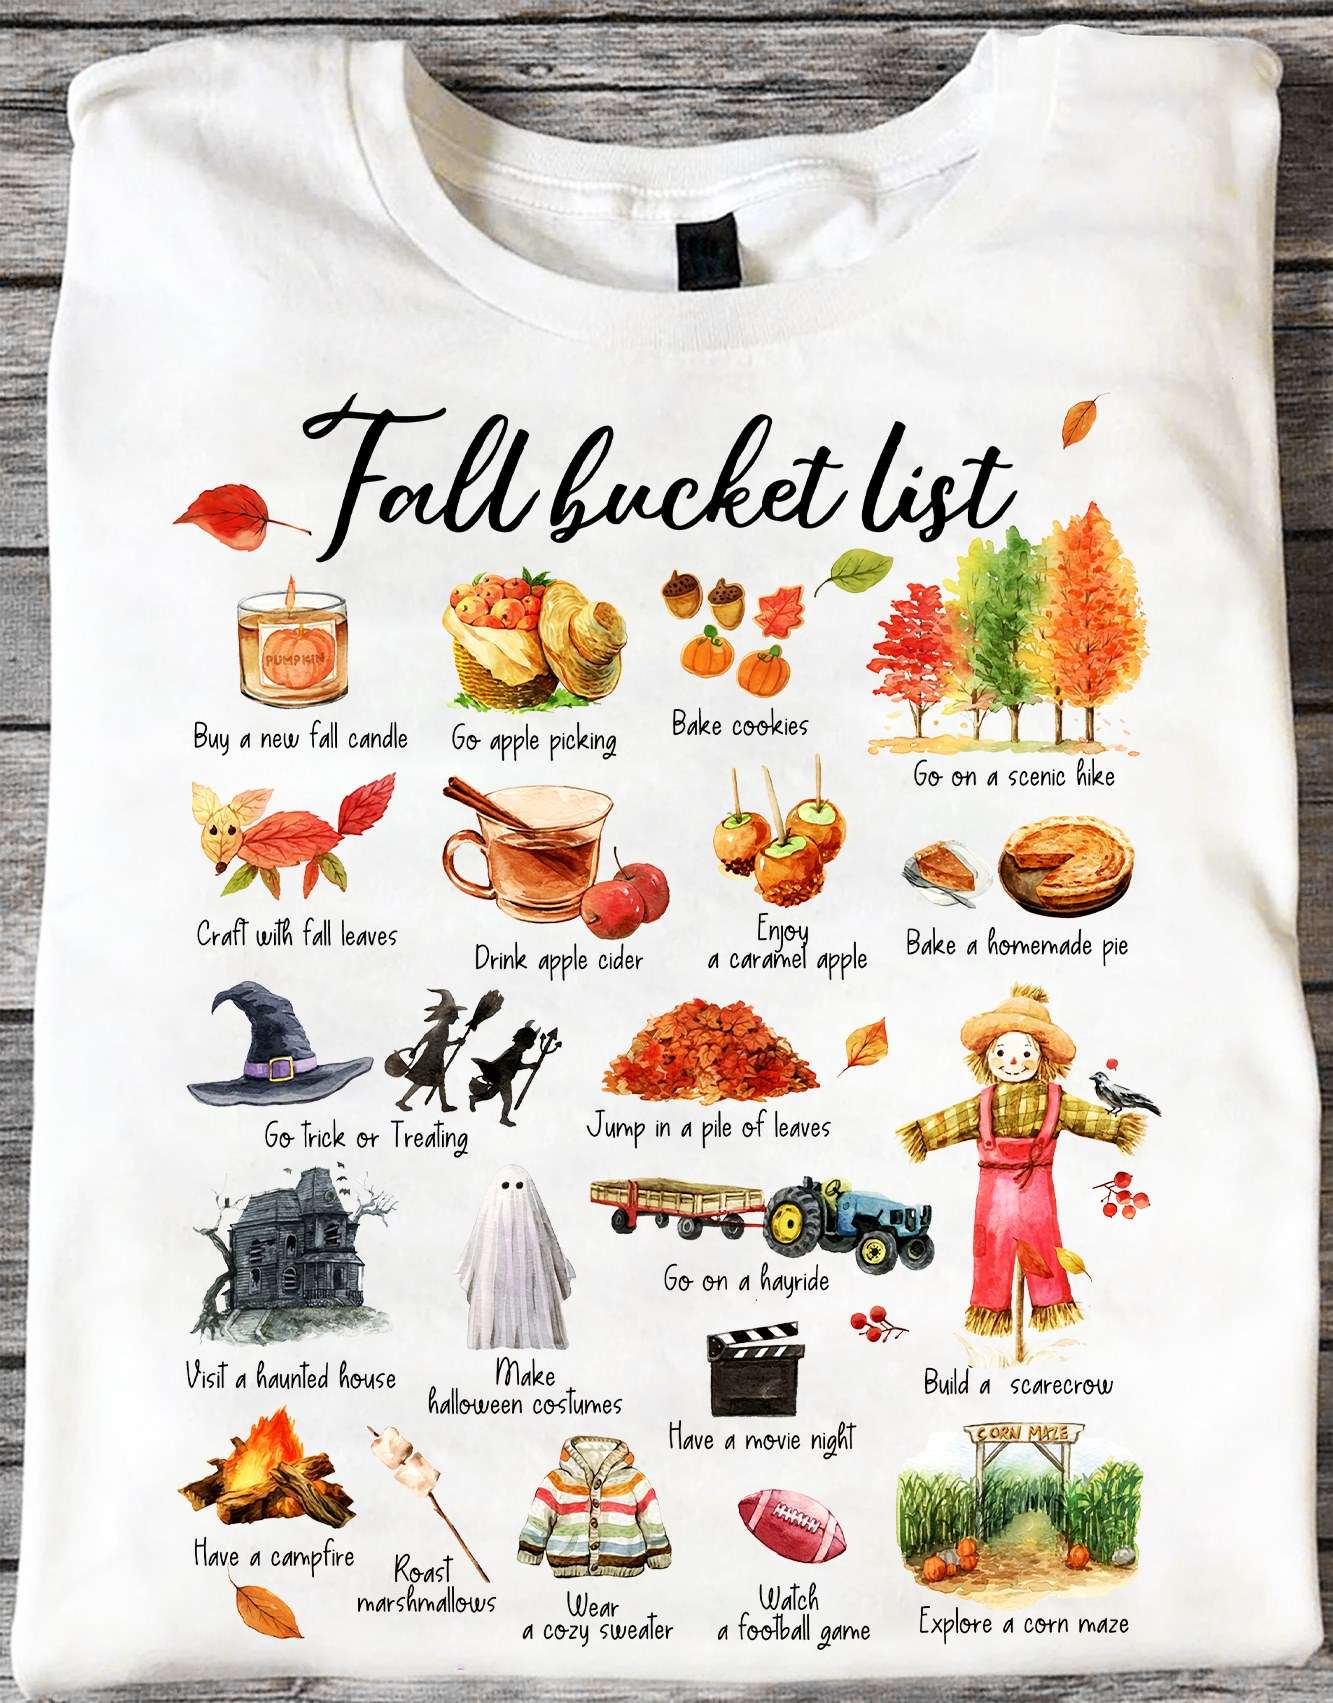 Fall bucket list - Go apple picking, bake cookies, drink apple cider